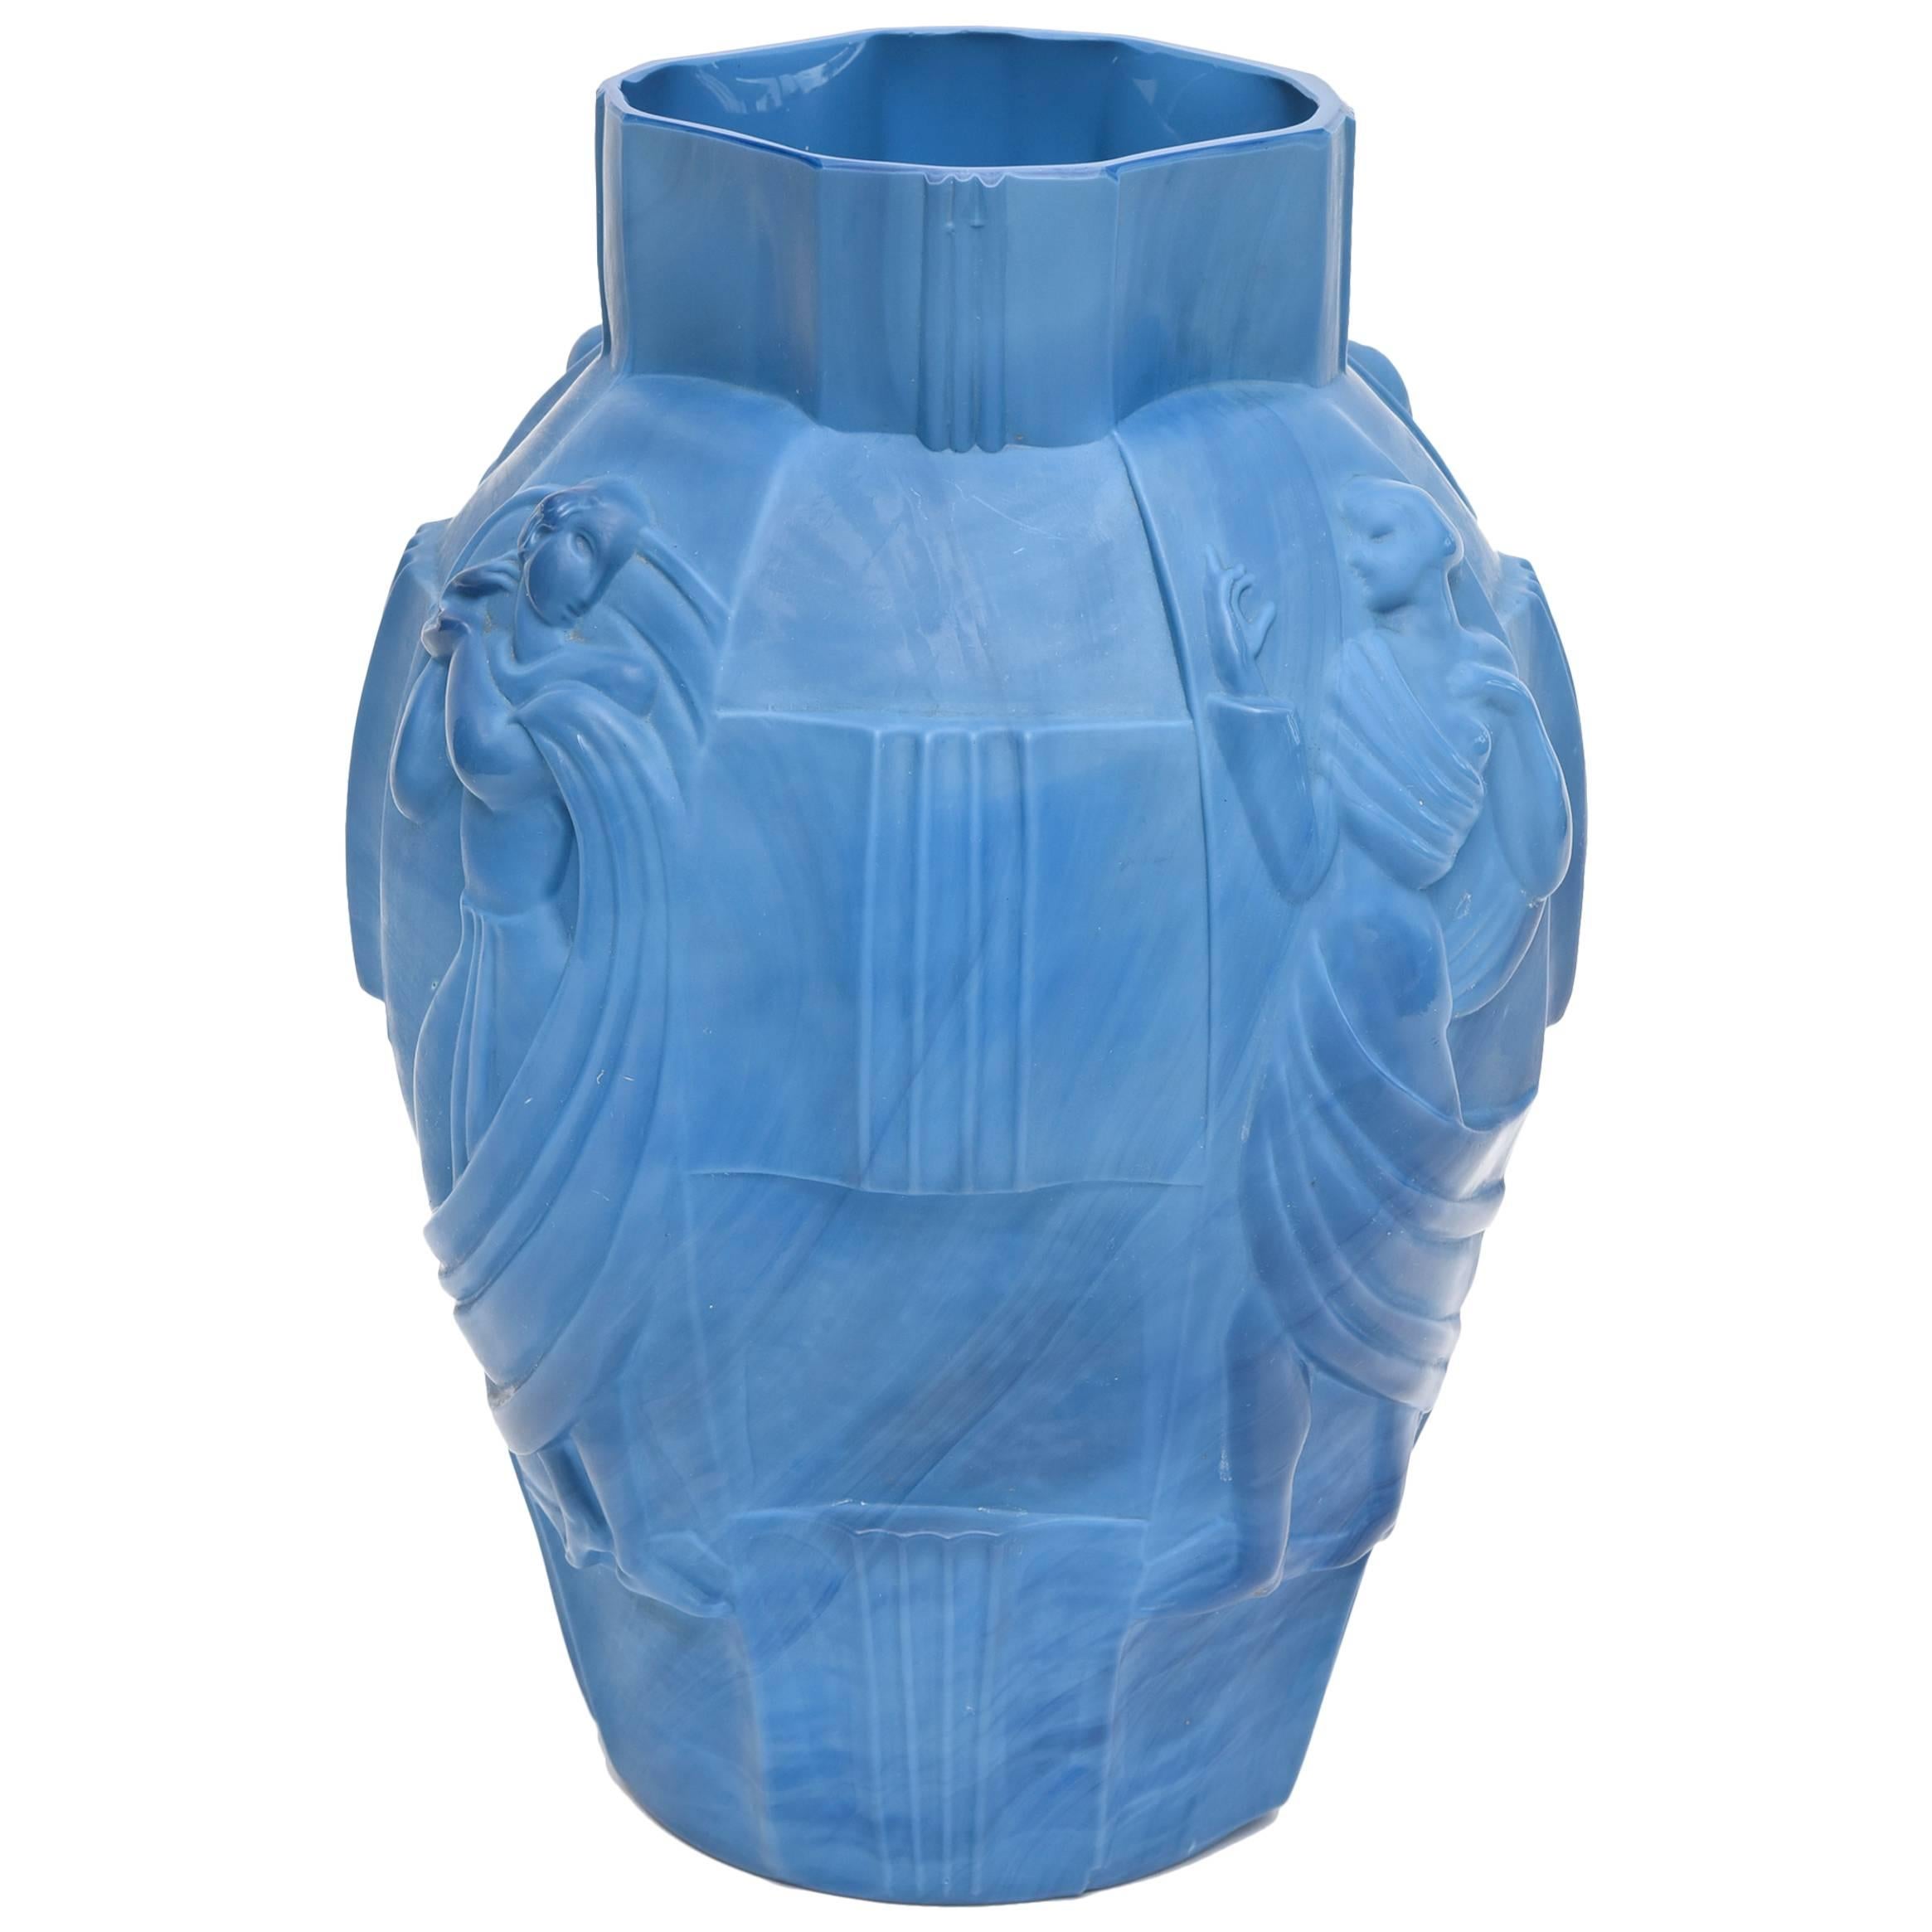 Curt Schlevogt Sensual Art Deco Czech Molded Nude Relief Glass Vase or Vessel